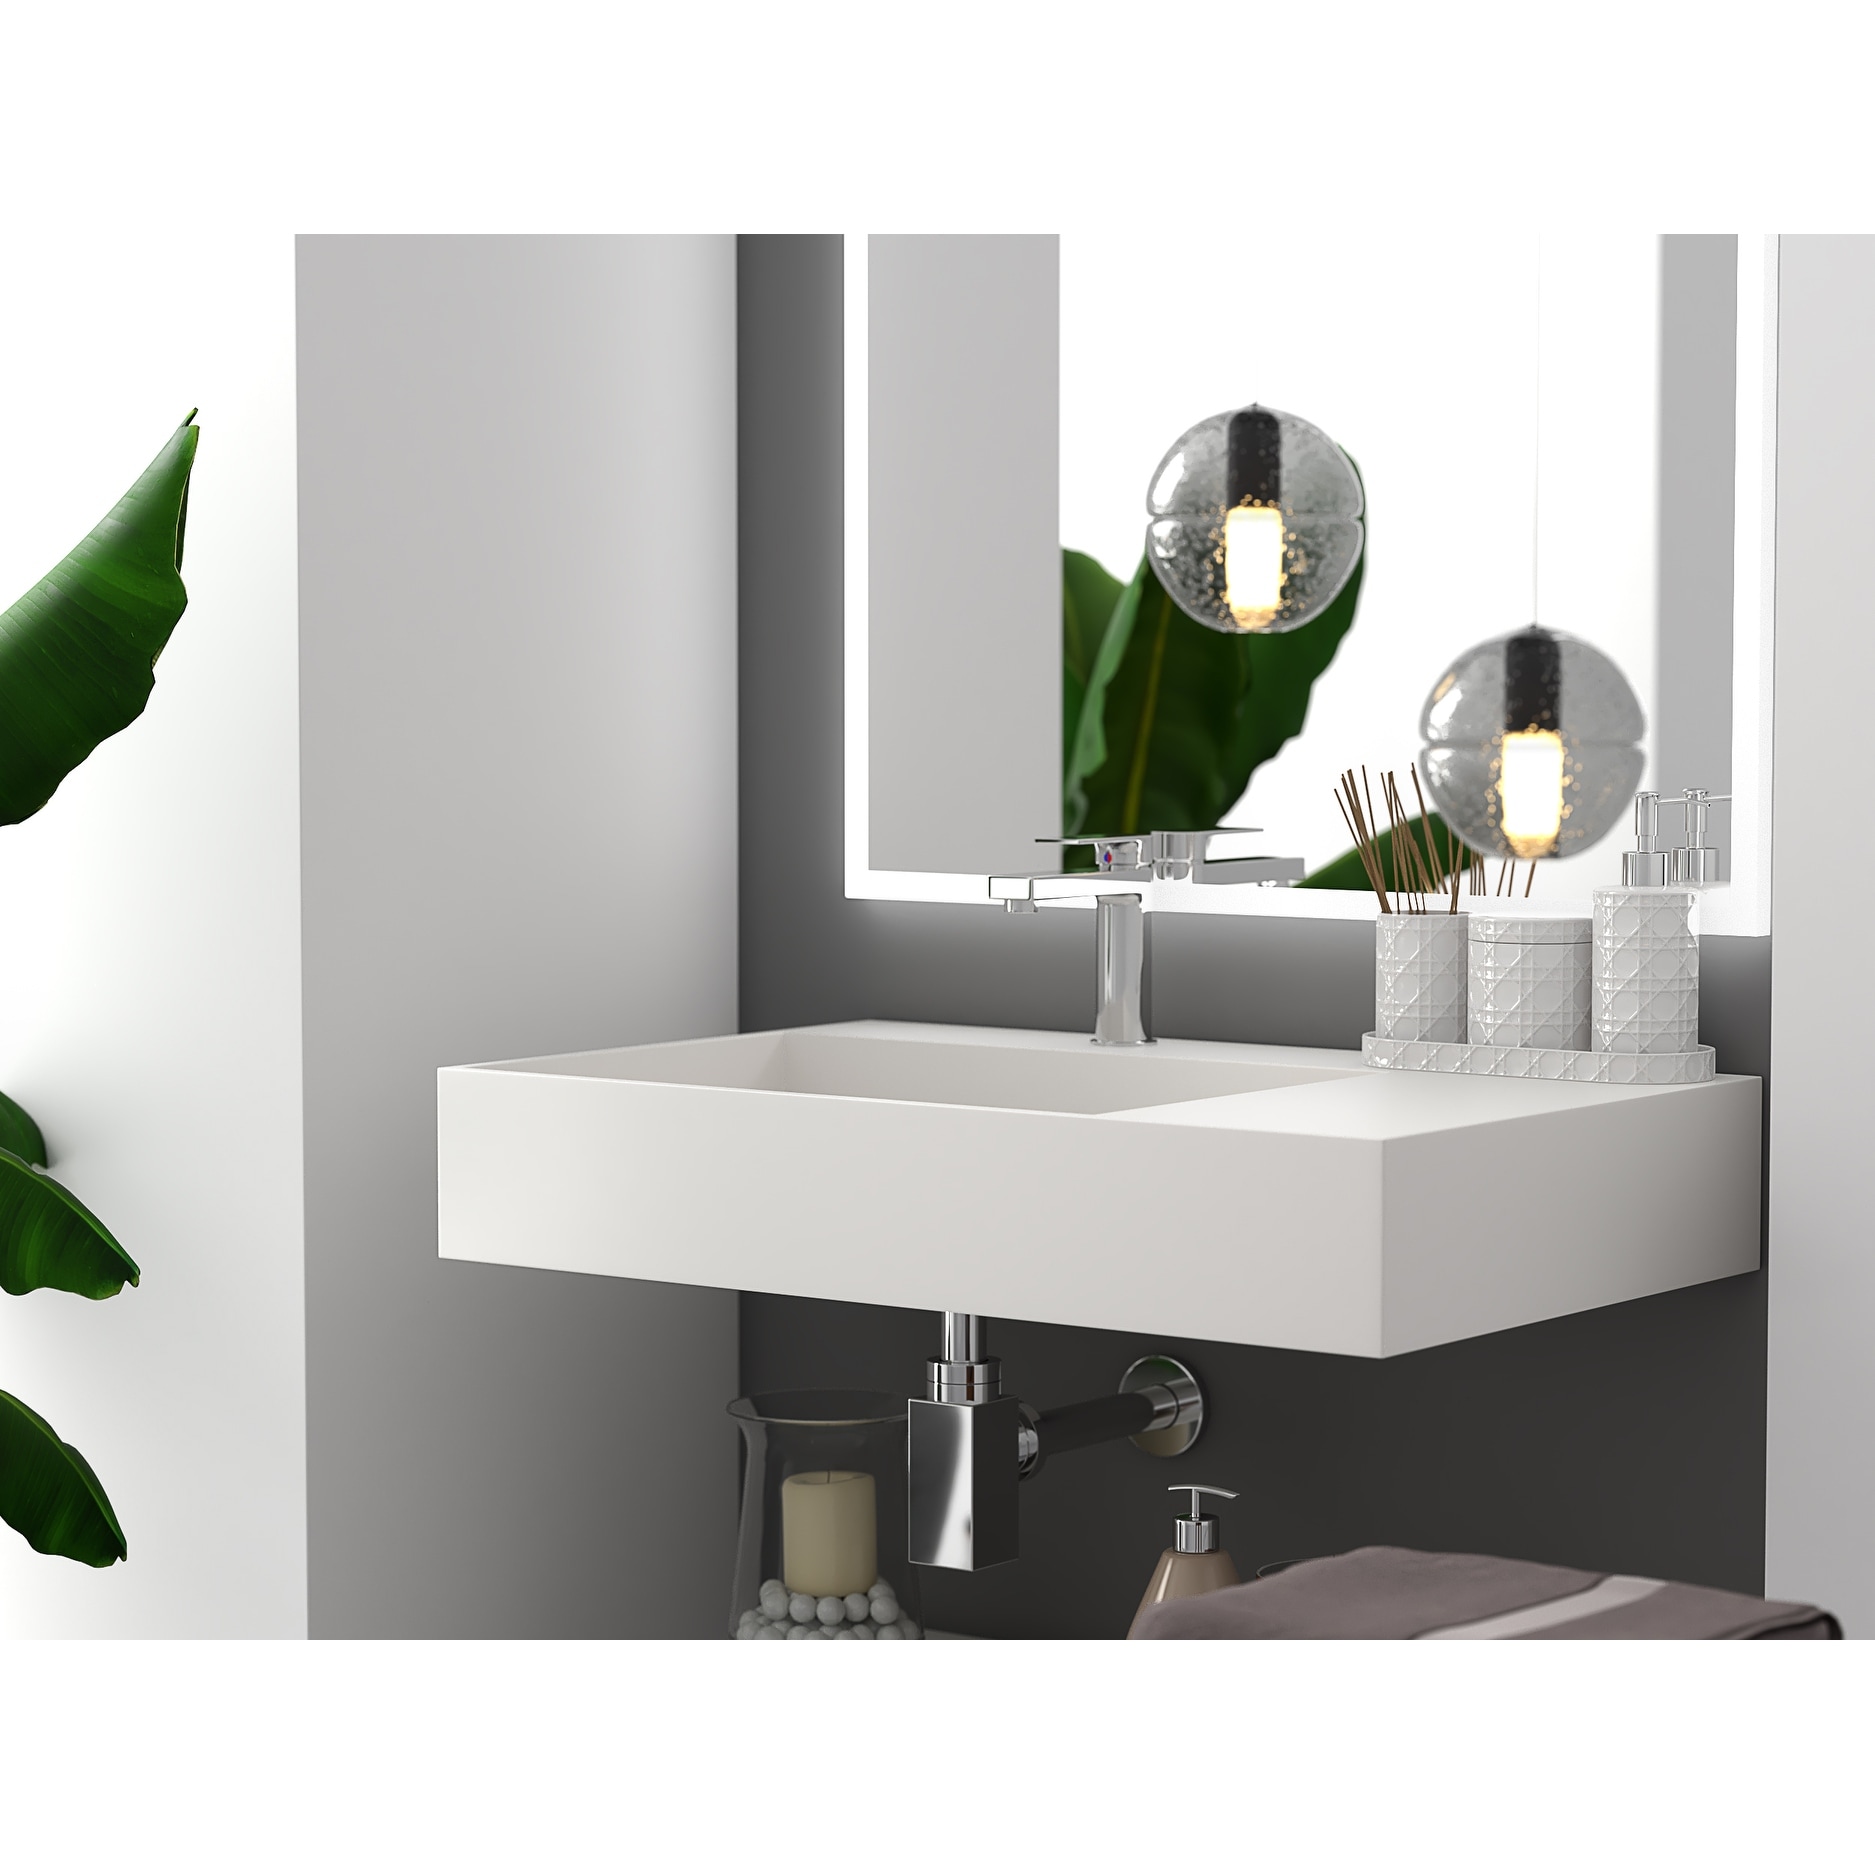 Beautiful Modern Wall Mounted Solid Surface Sink